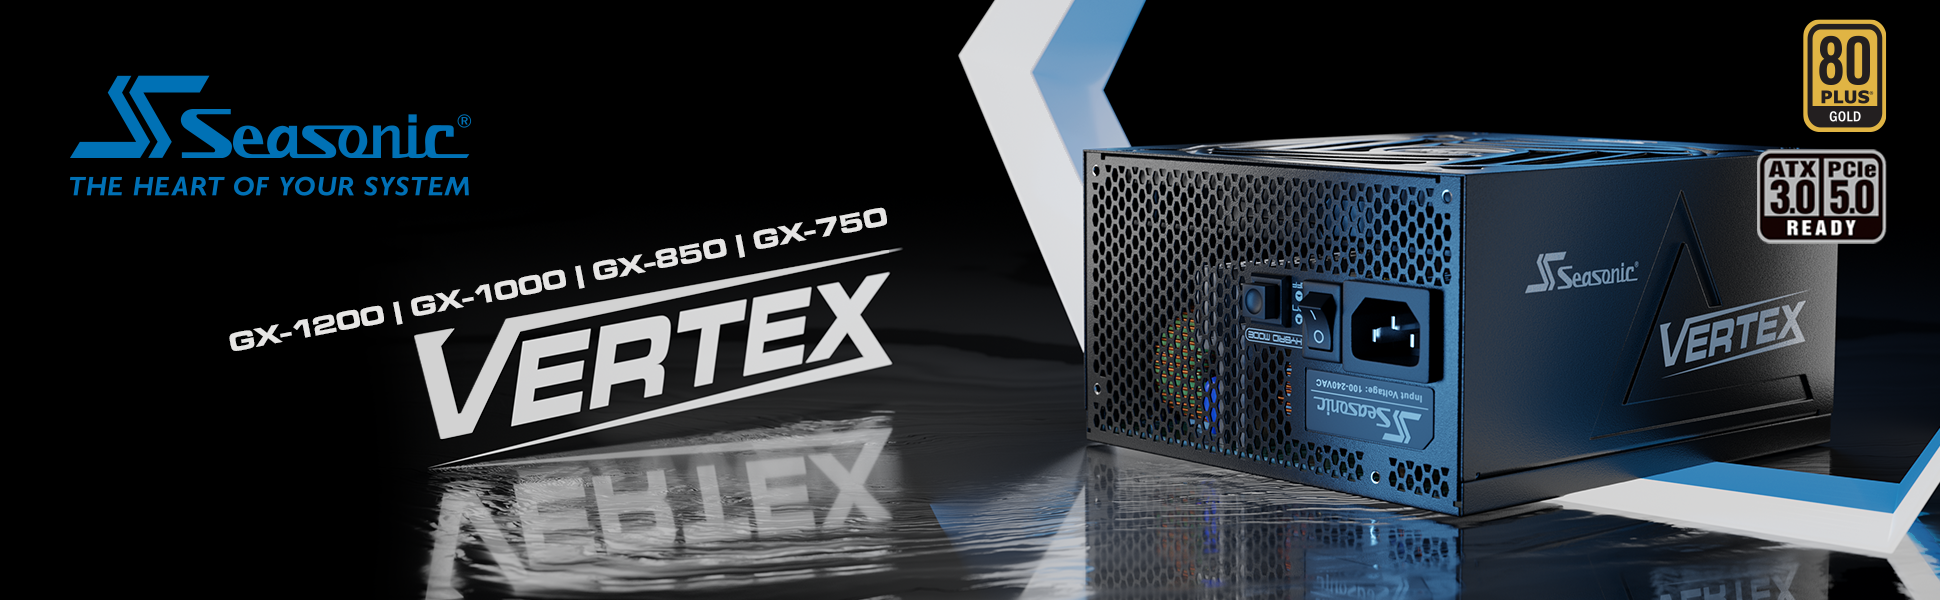 Seasonic VERTEX GX Series Power Supply